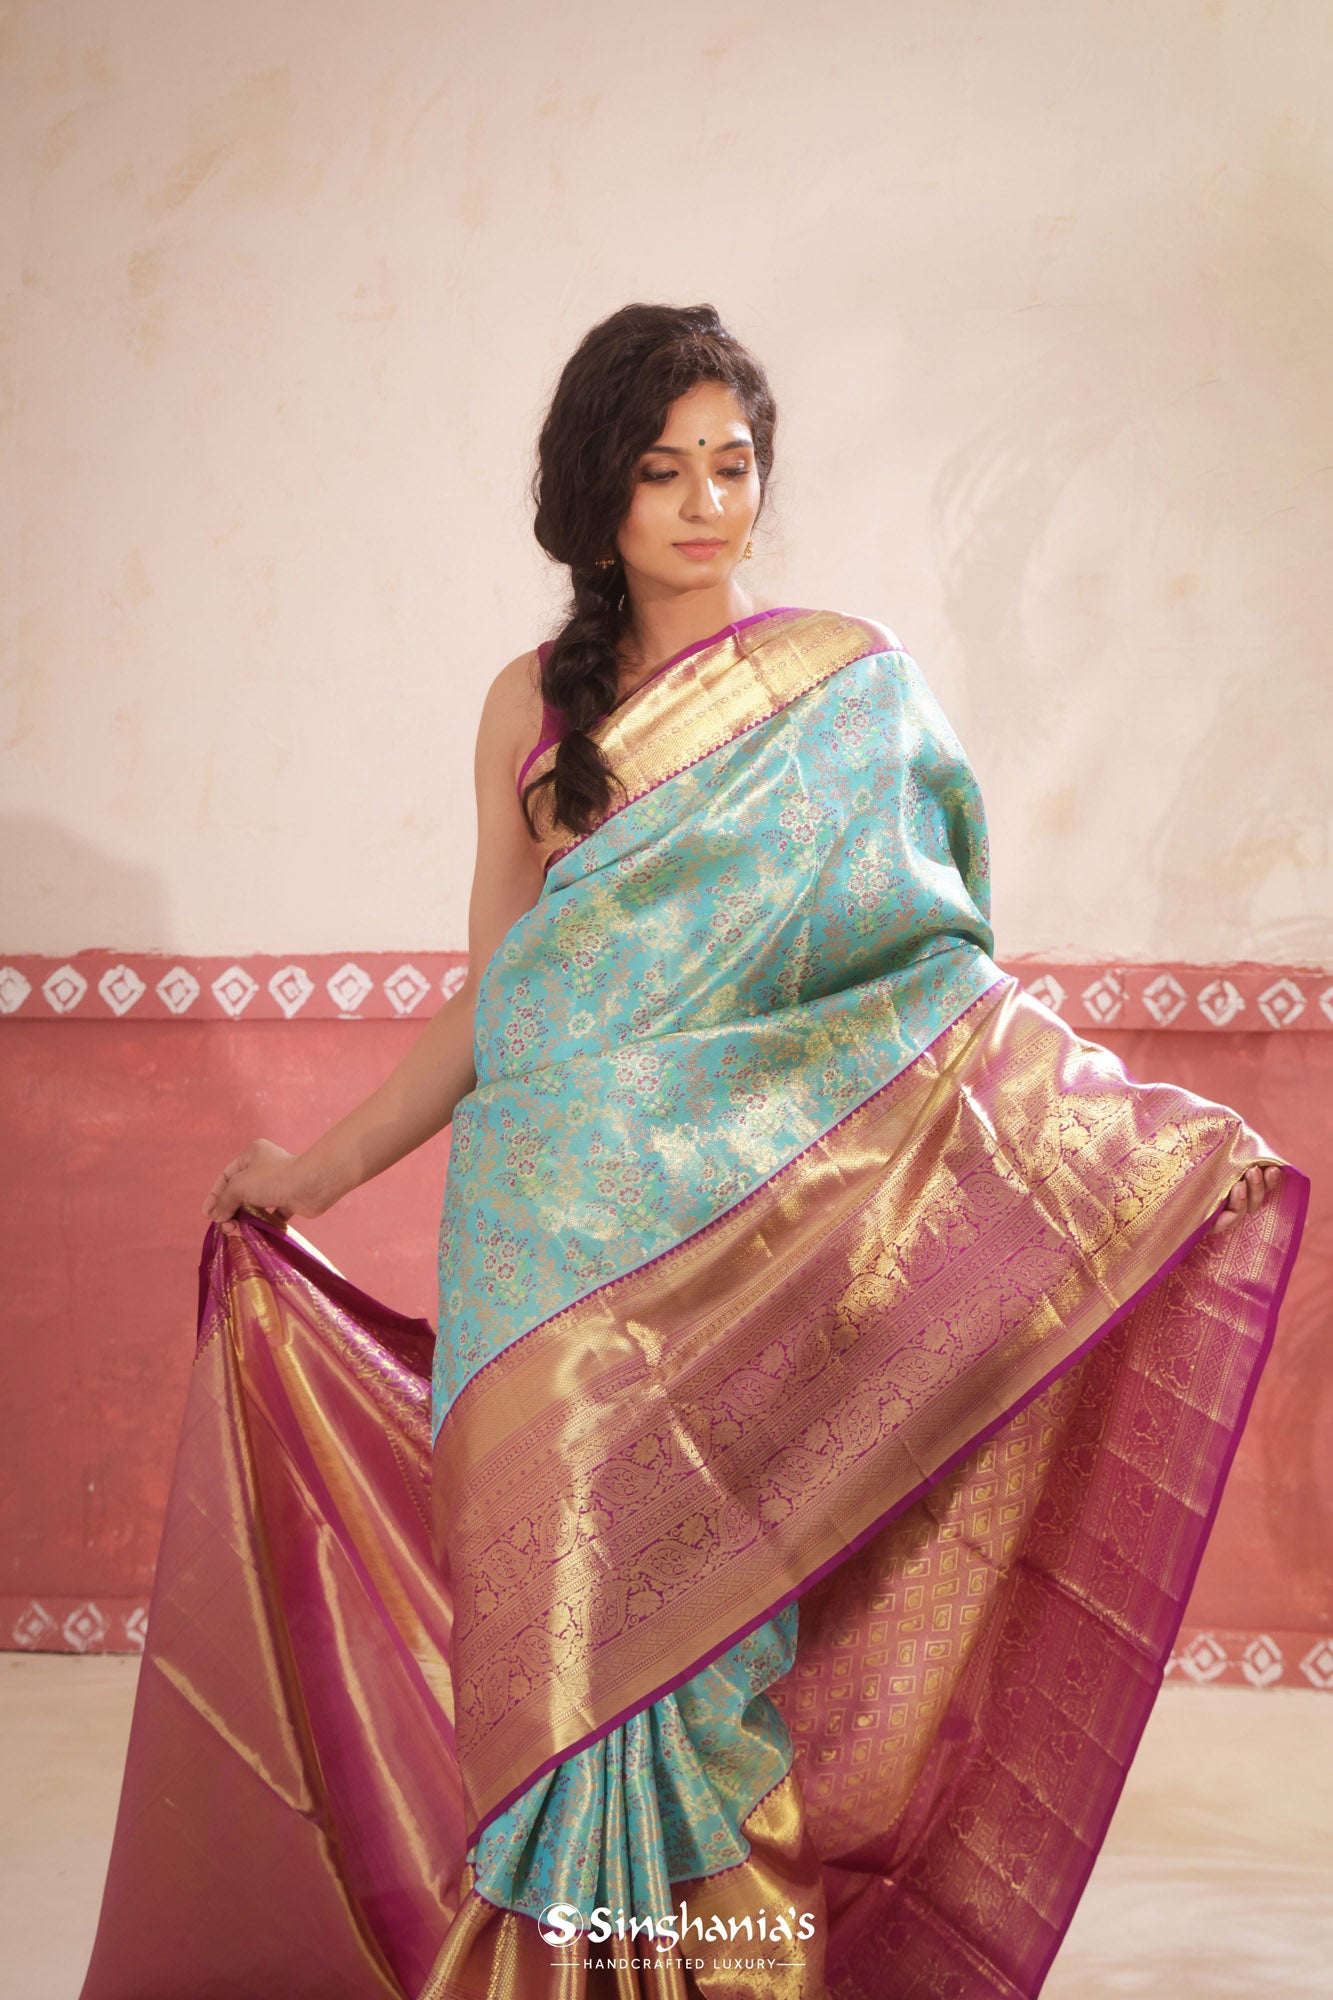 Medium Turquoise Kanjivaram Silk Saree With Floral Jaal Design